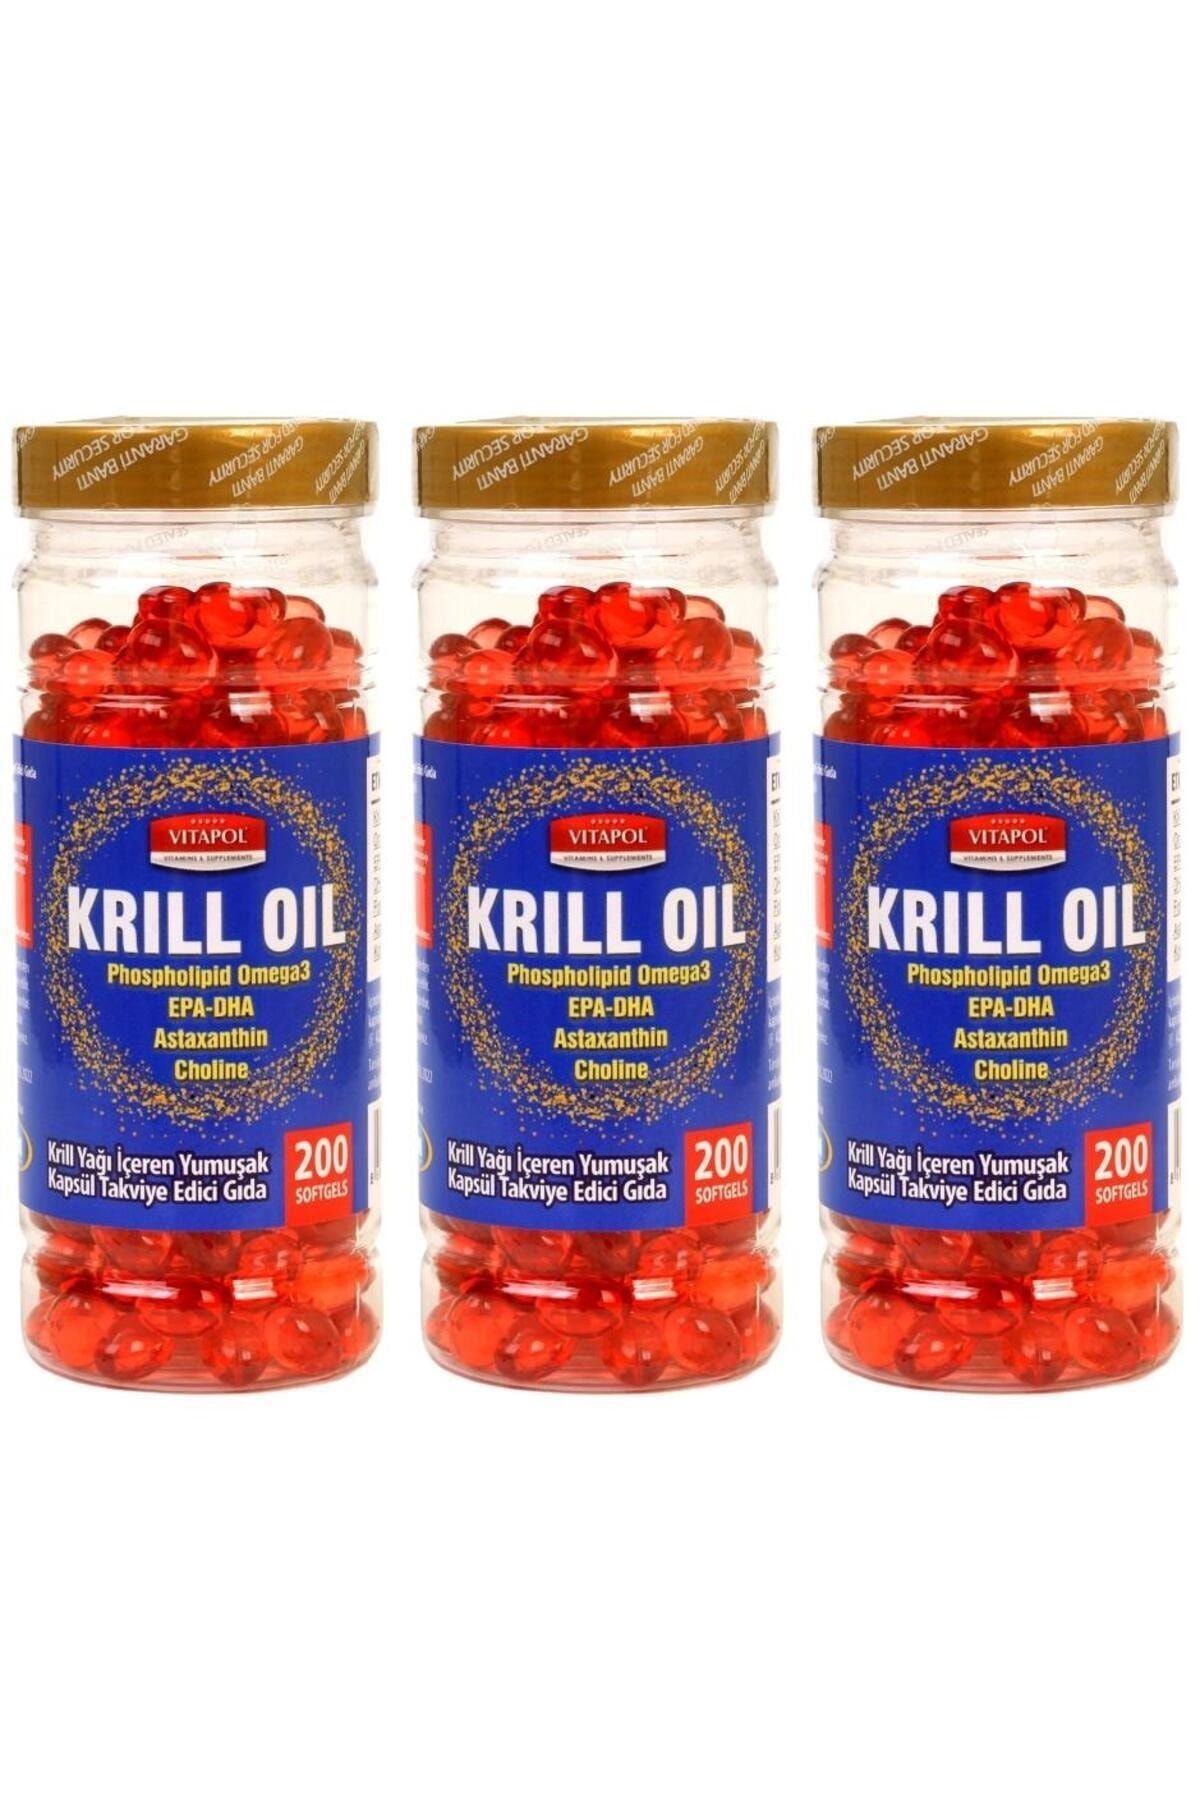 Vitapol Krill Oil 3x200 Yumuşak Kapsül Phospholipid Omega 3 Epa Dha Astaxanthin Choline